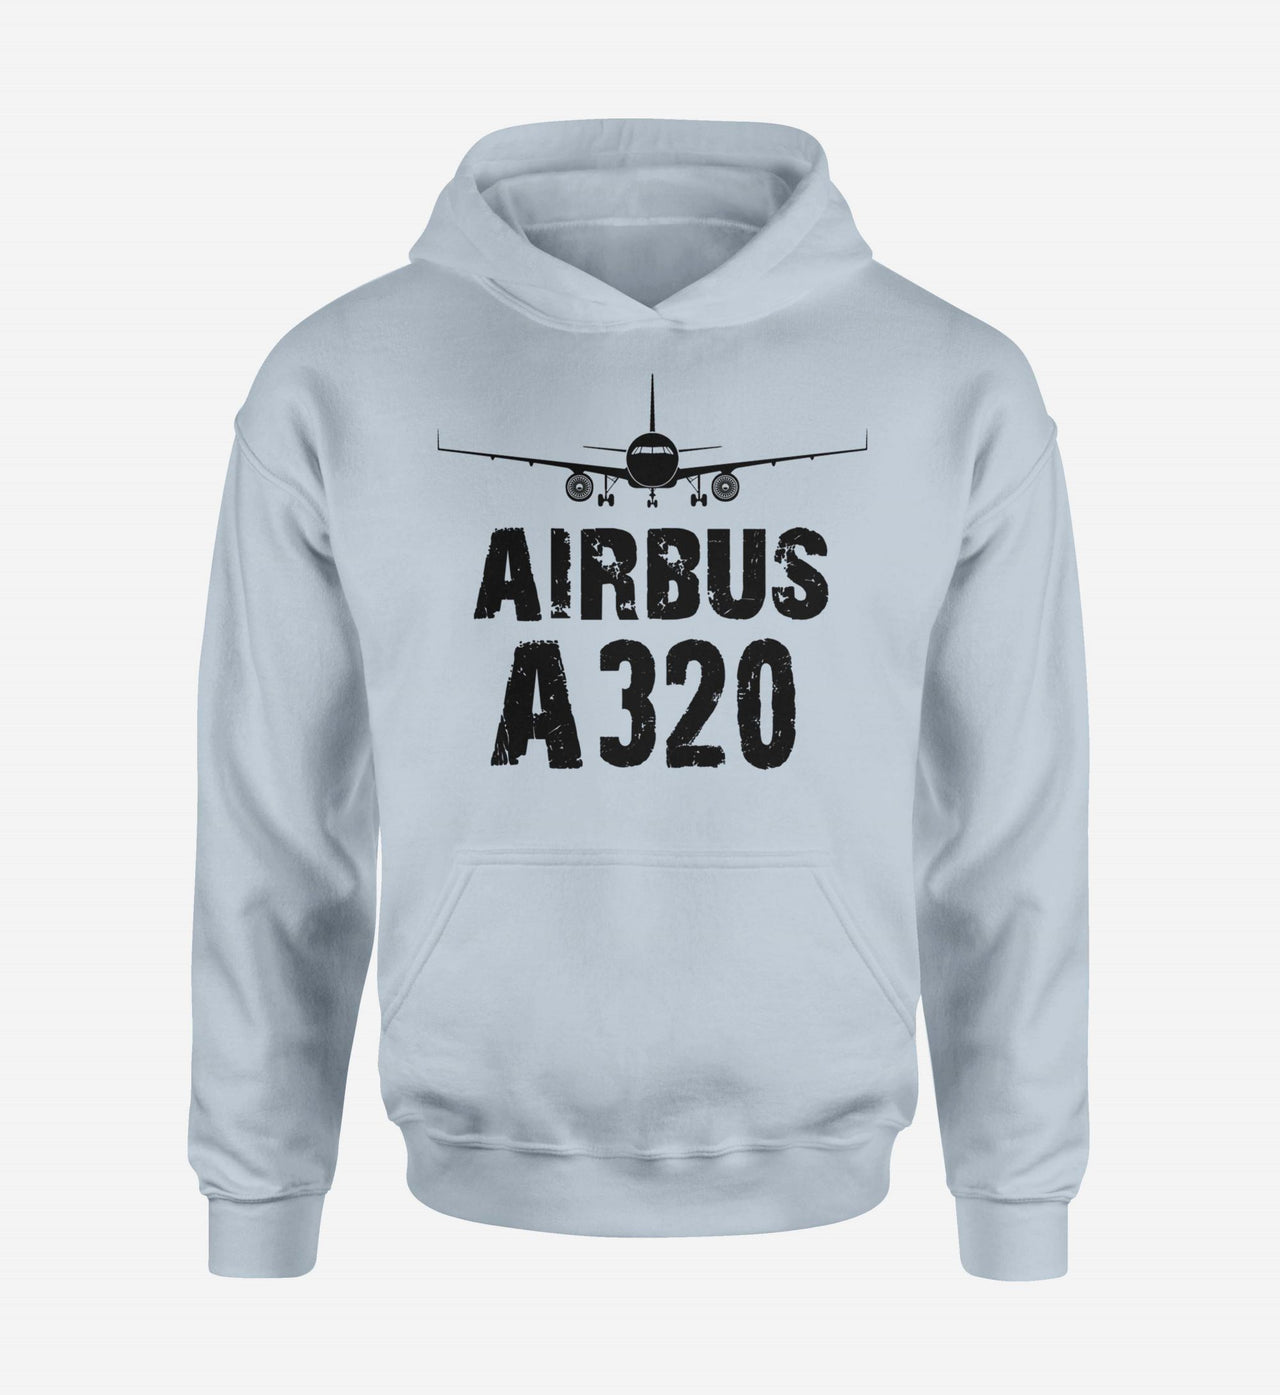 Airbus A320 & Plane Designed Hoodies